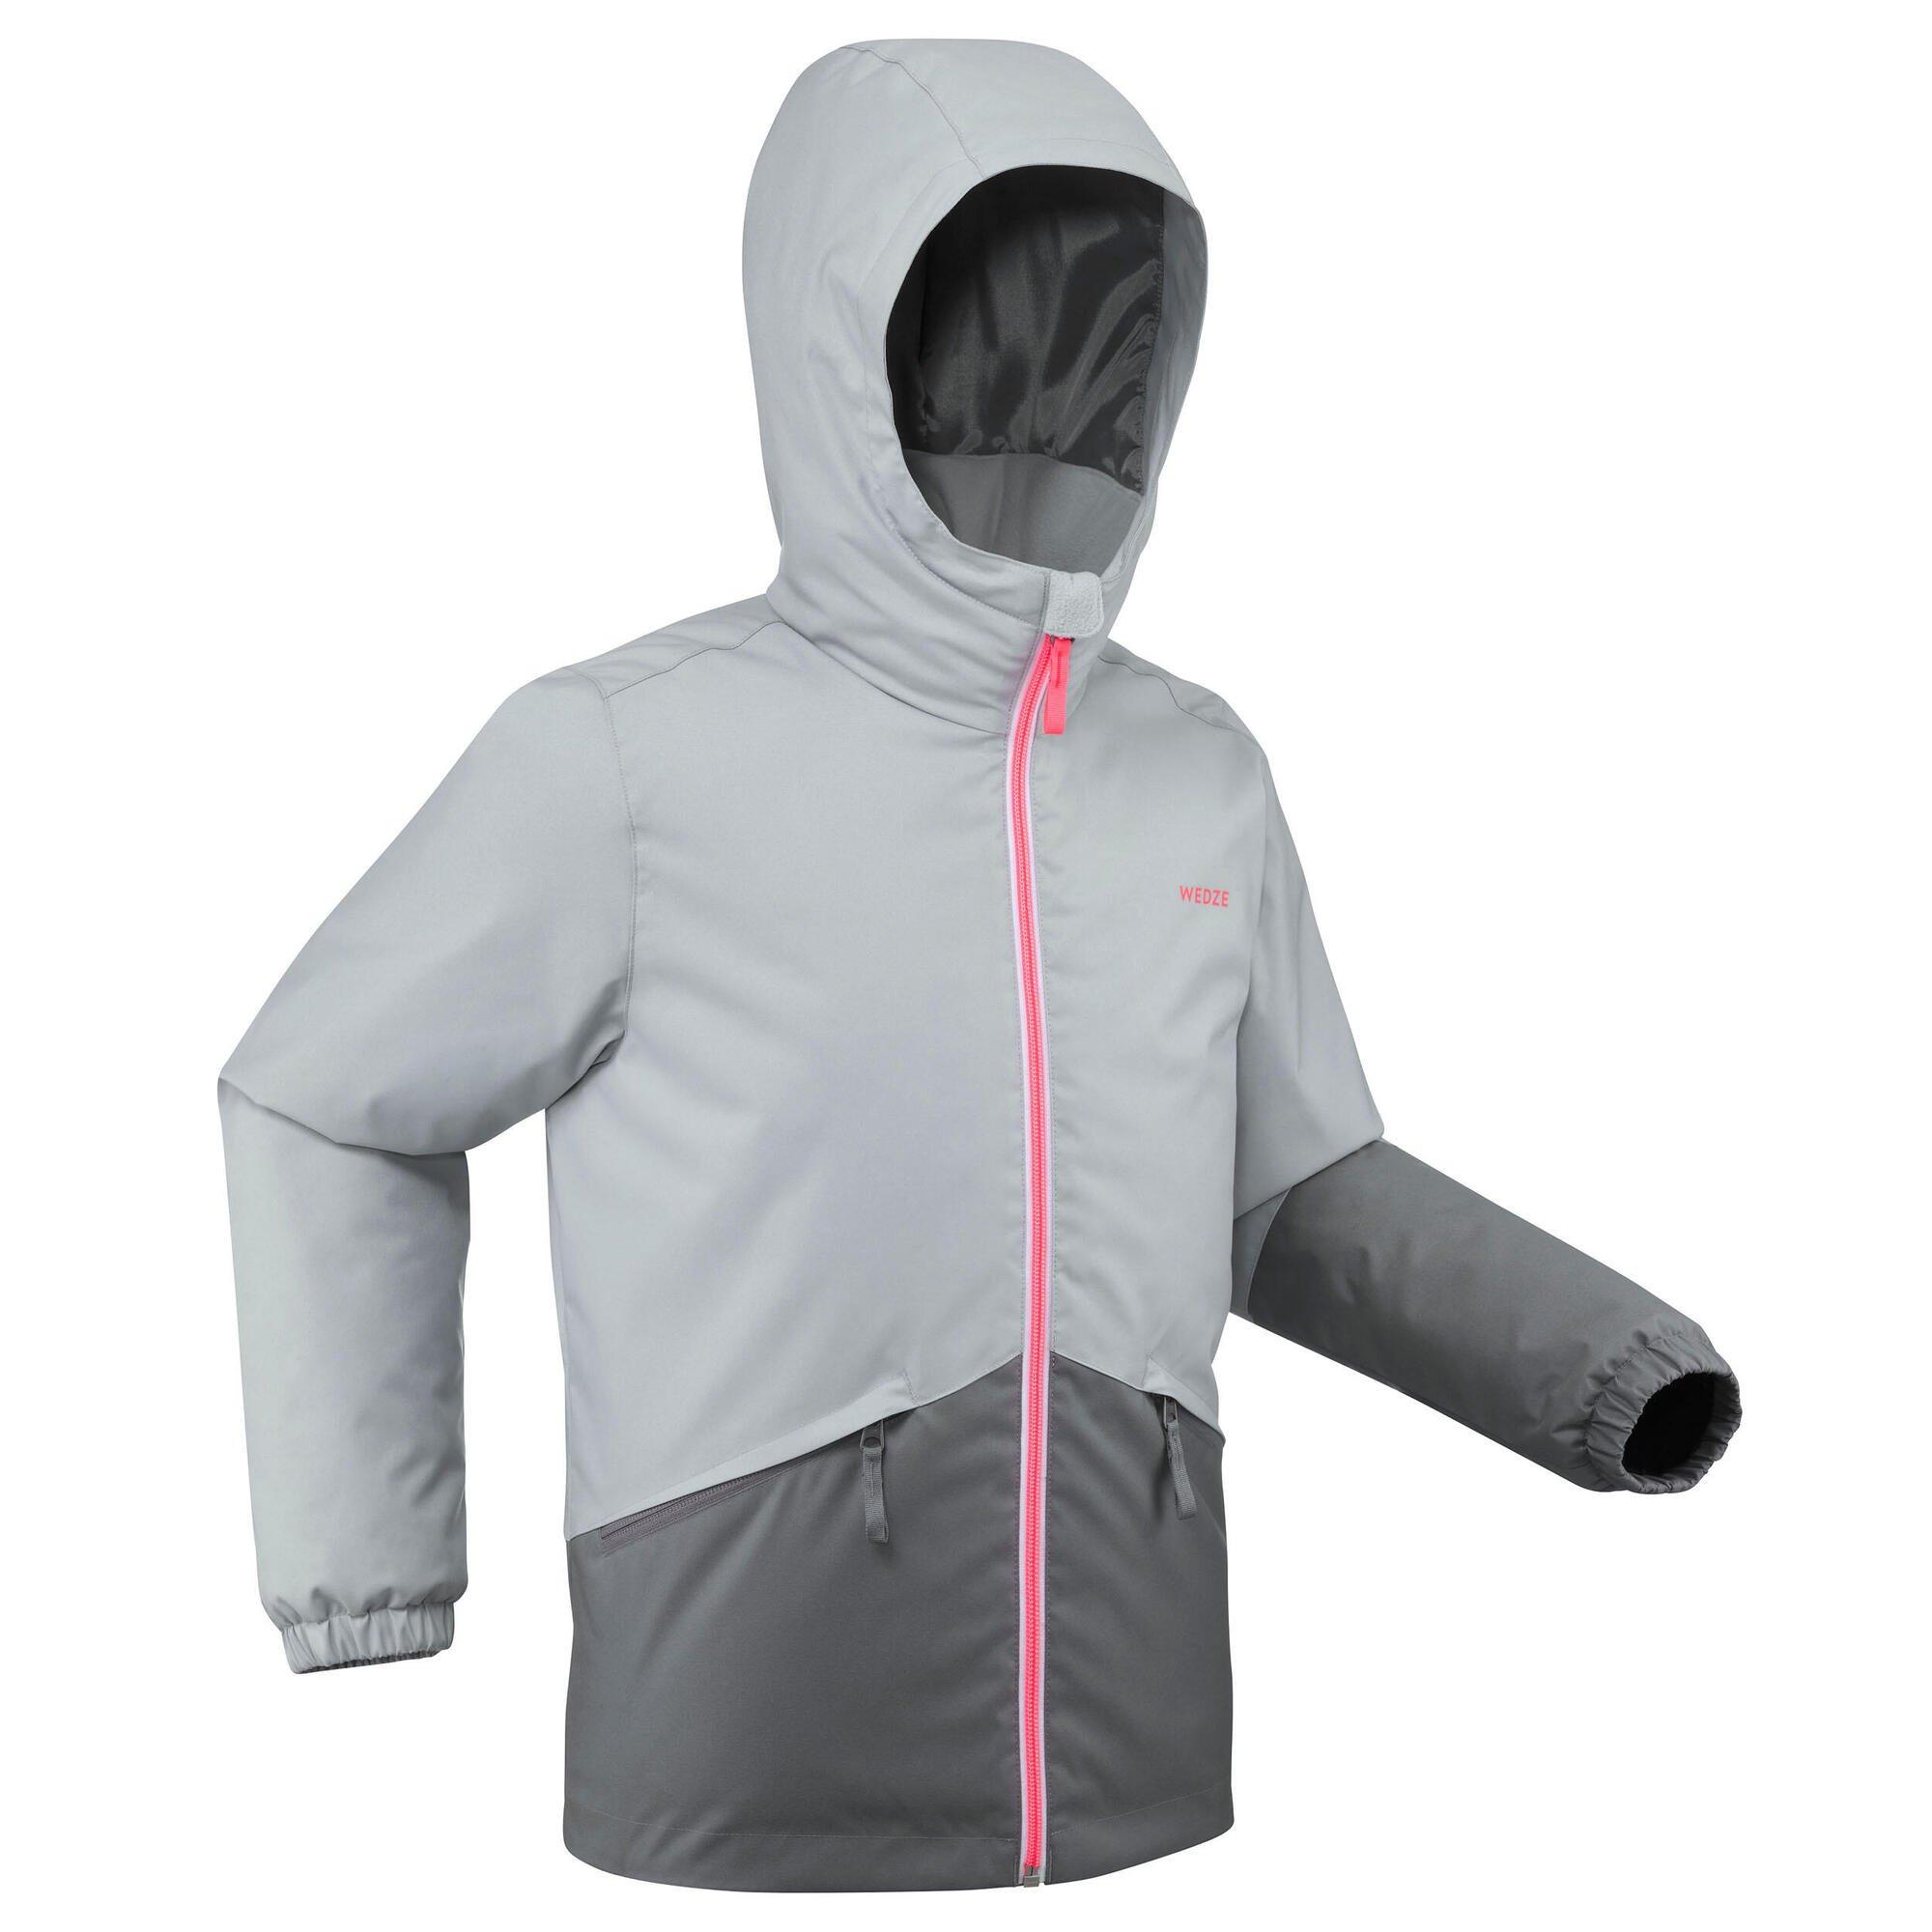 Теплая и водонепроницаемая лыжная куртка Decathlon — 100 Wedze, серый